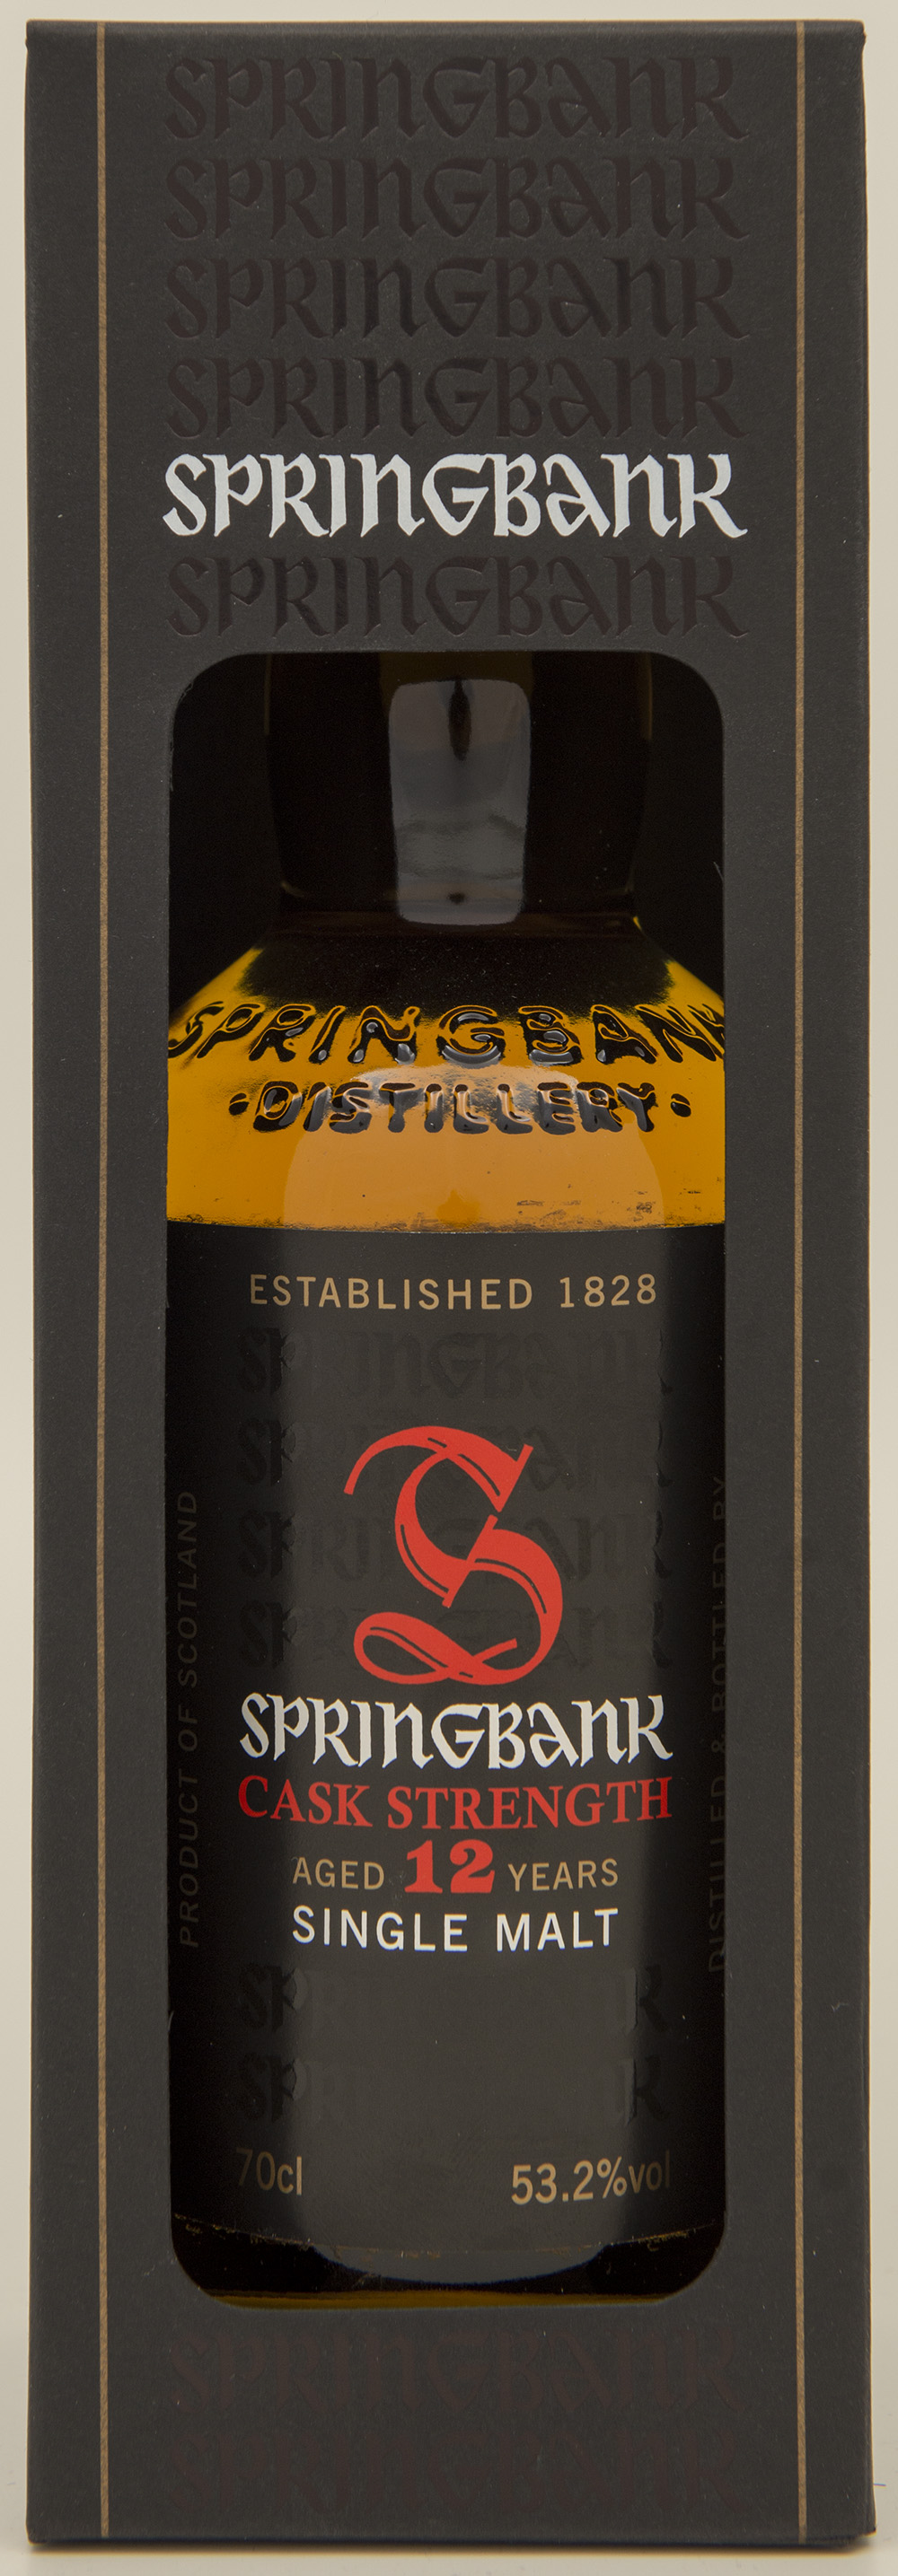 Billede: DSC_1391 - Springbank 12 cask strength - box front.jpg